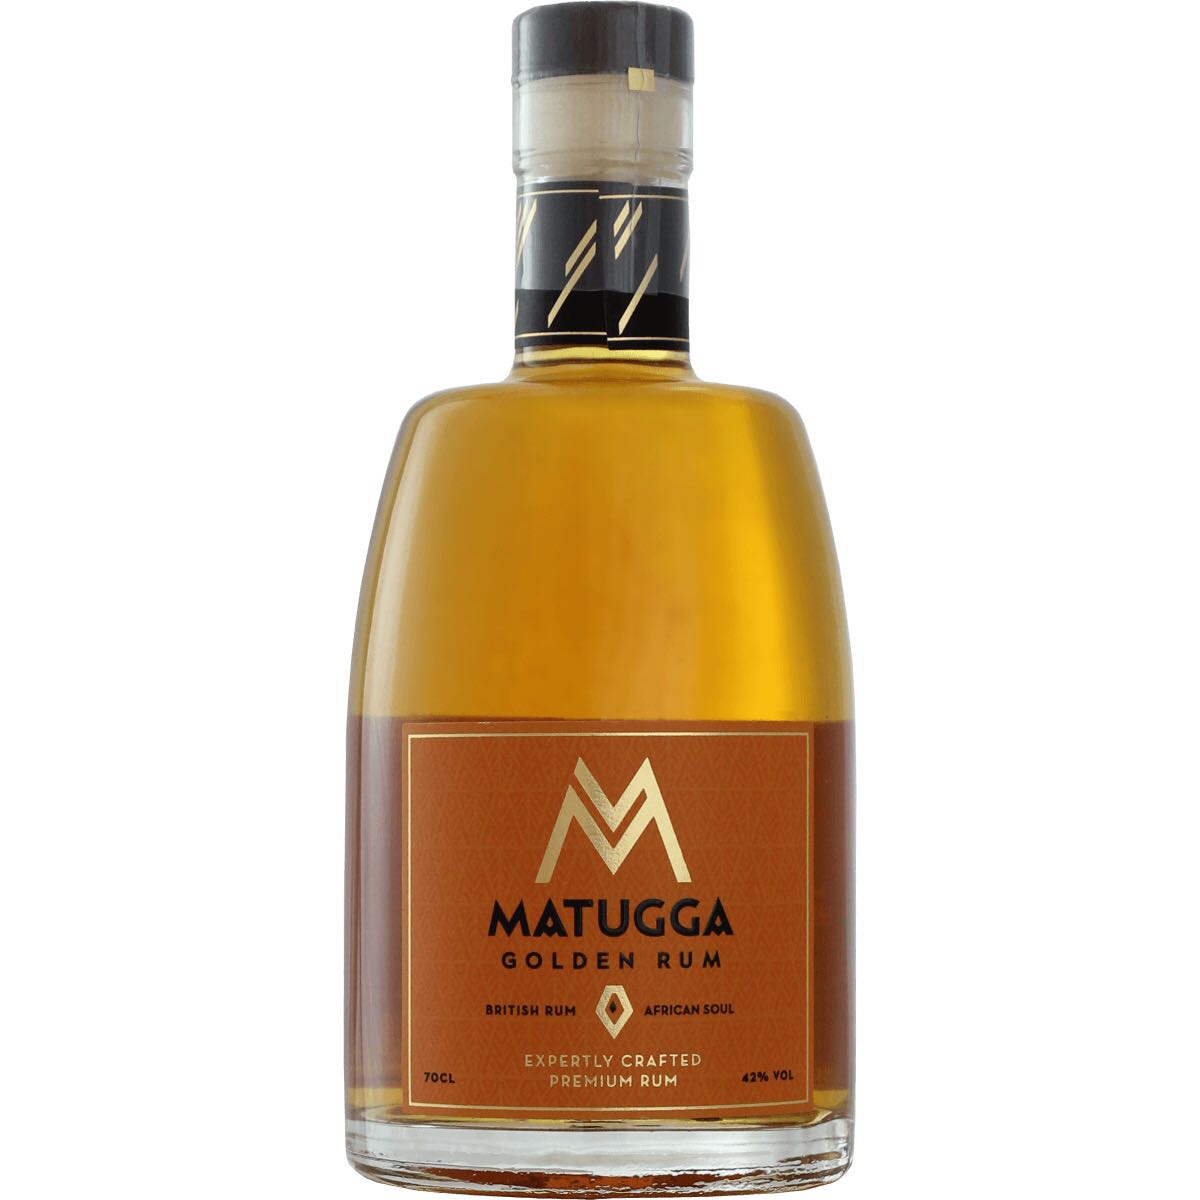 Bottle image of Golden Rum